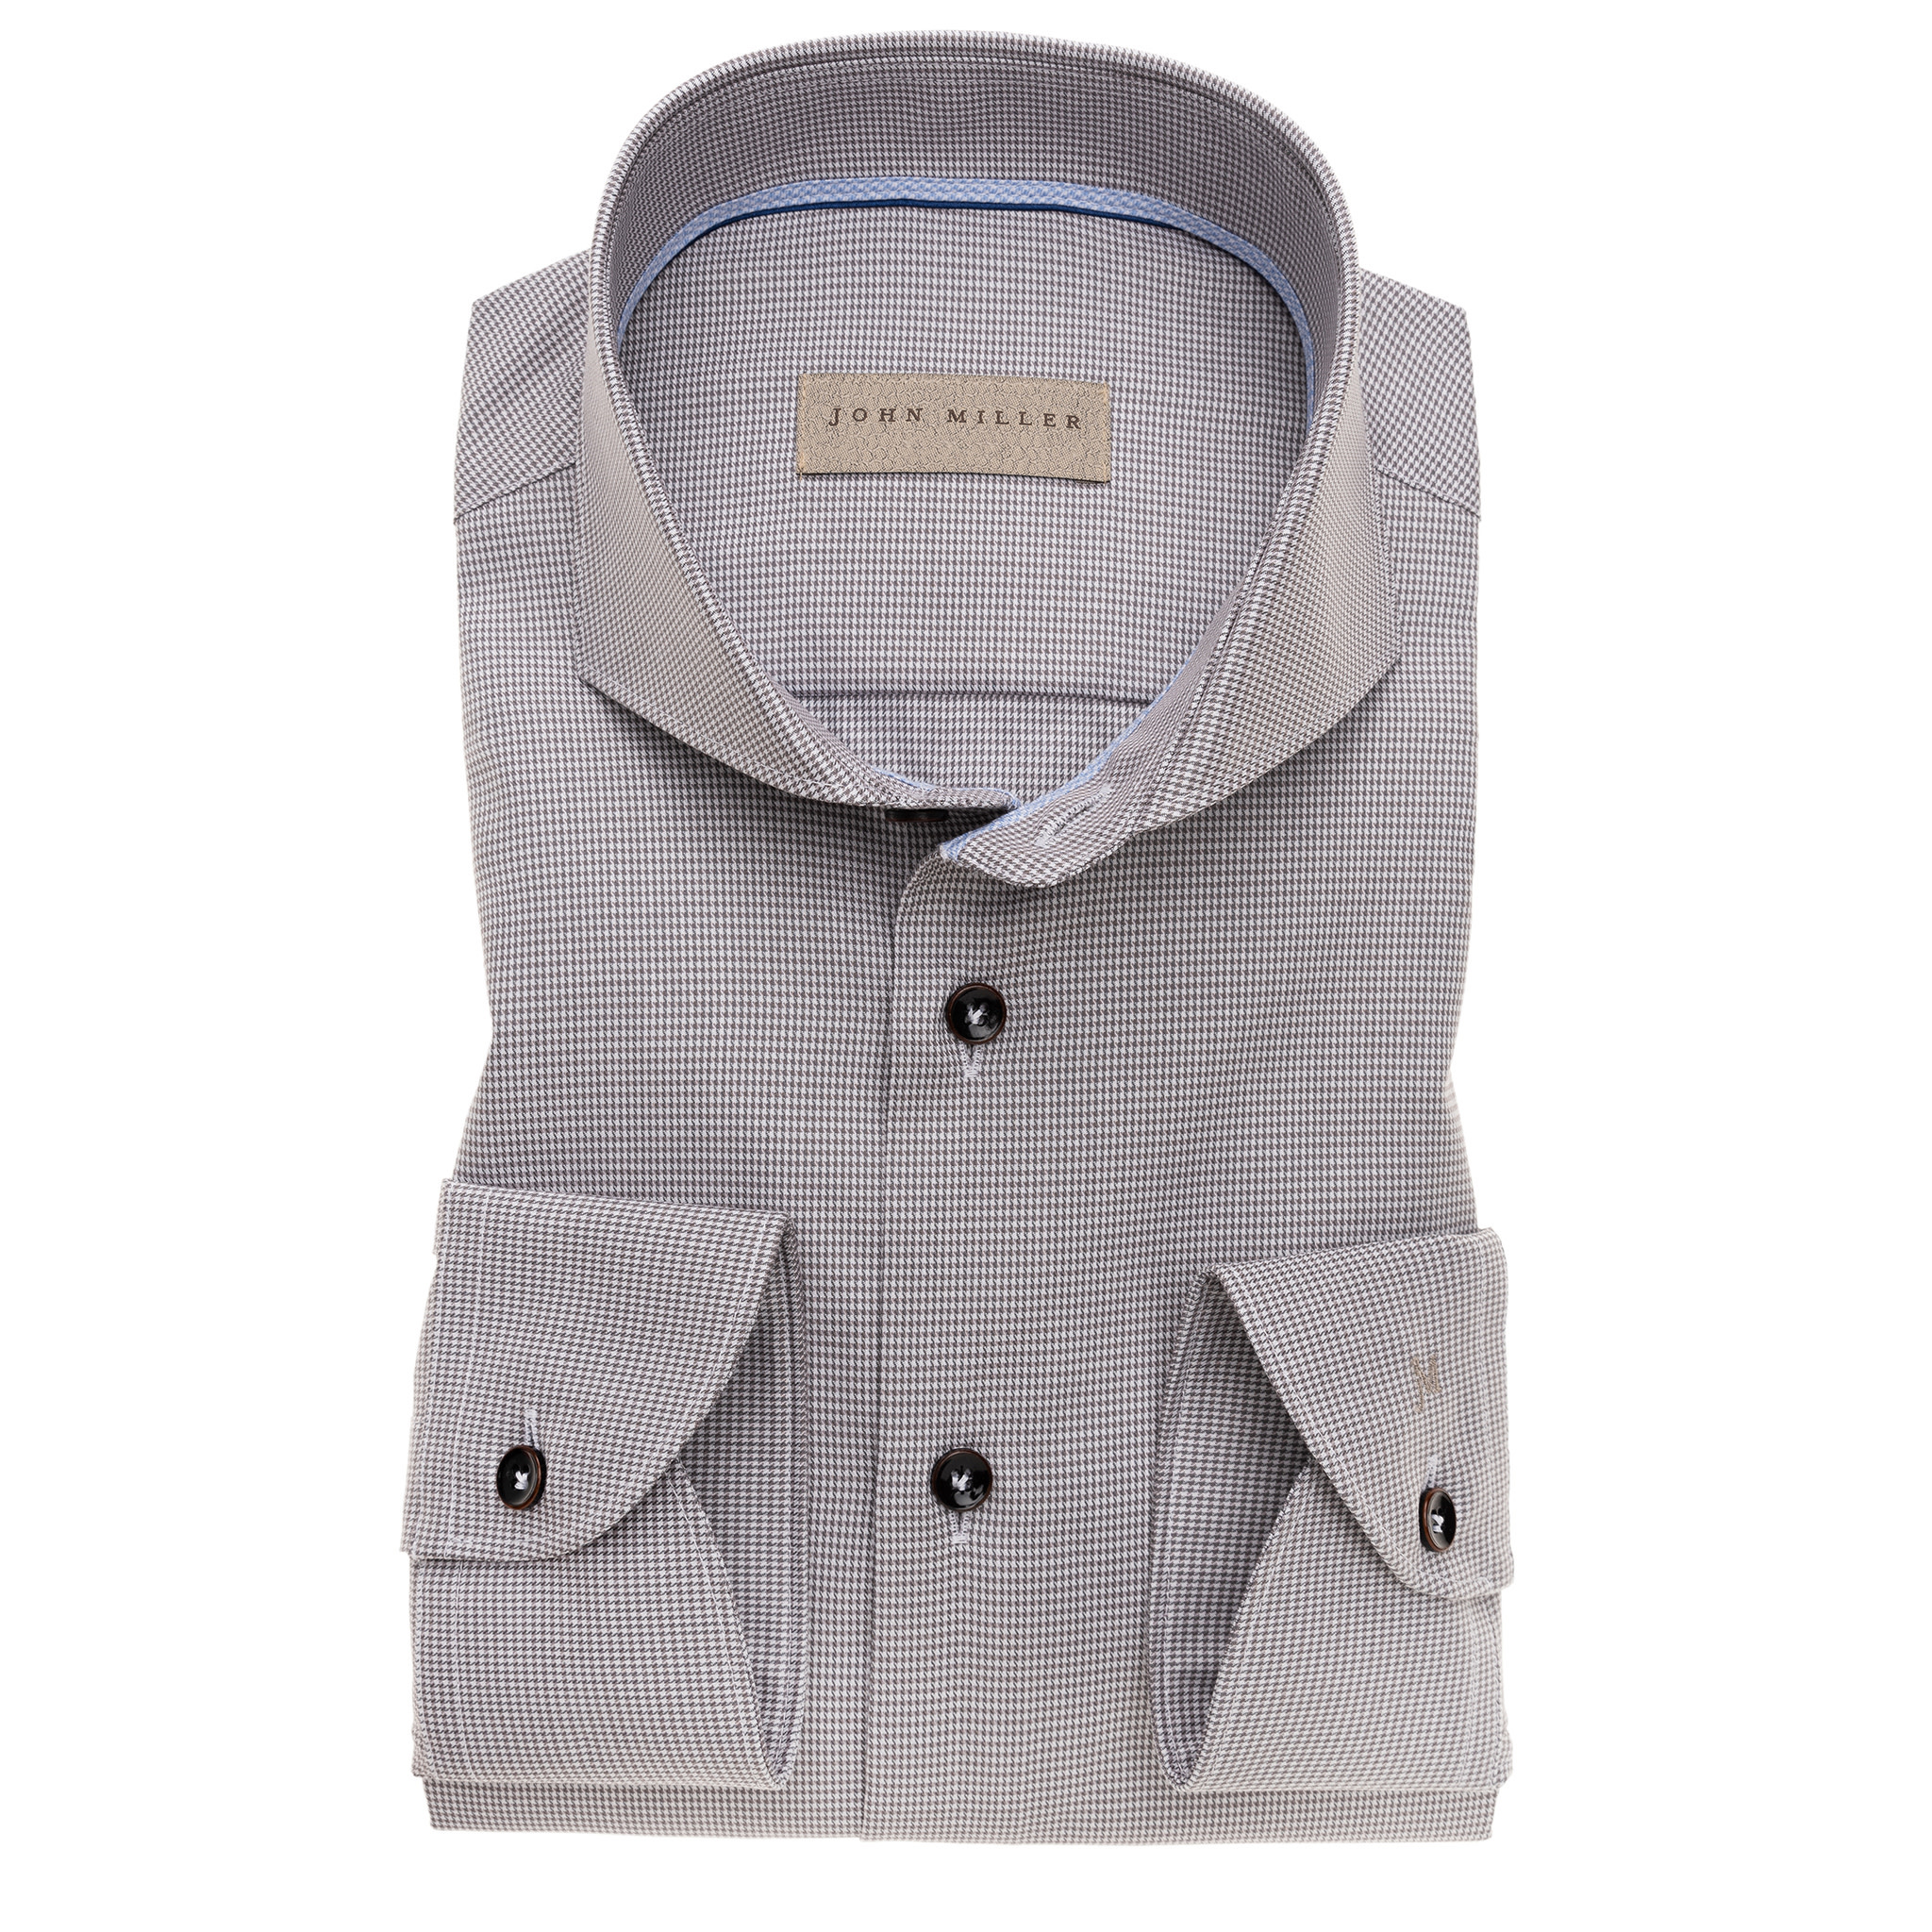 Wacht even Promotie been John Miller tailored fit overhemd grijs | Tim Menswear - Tim Menswear